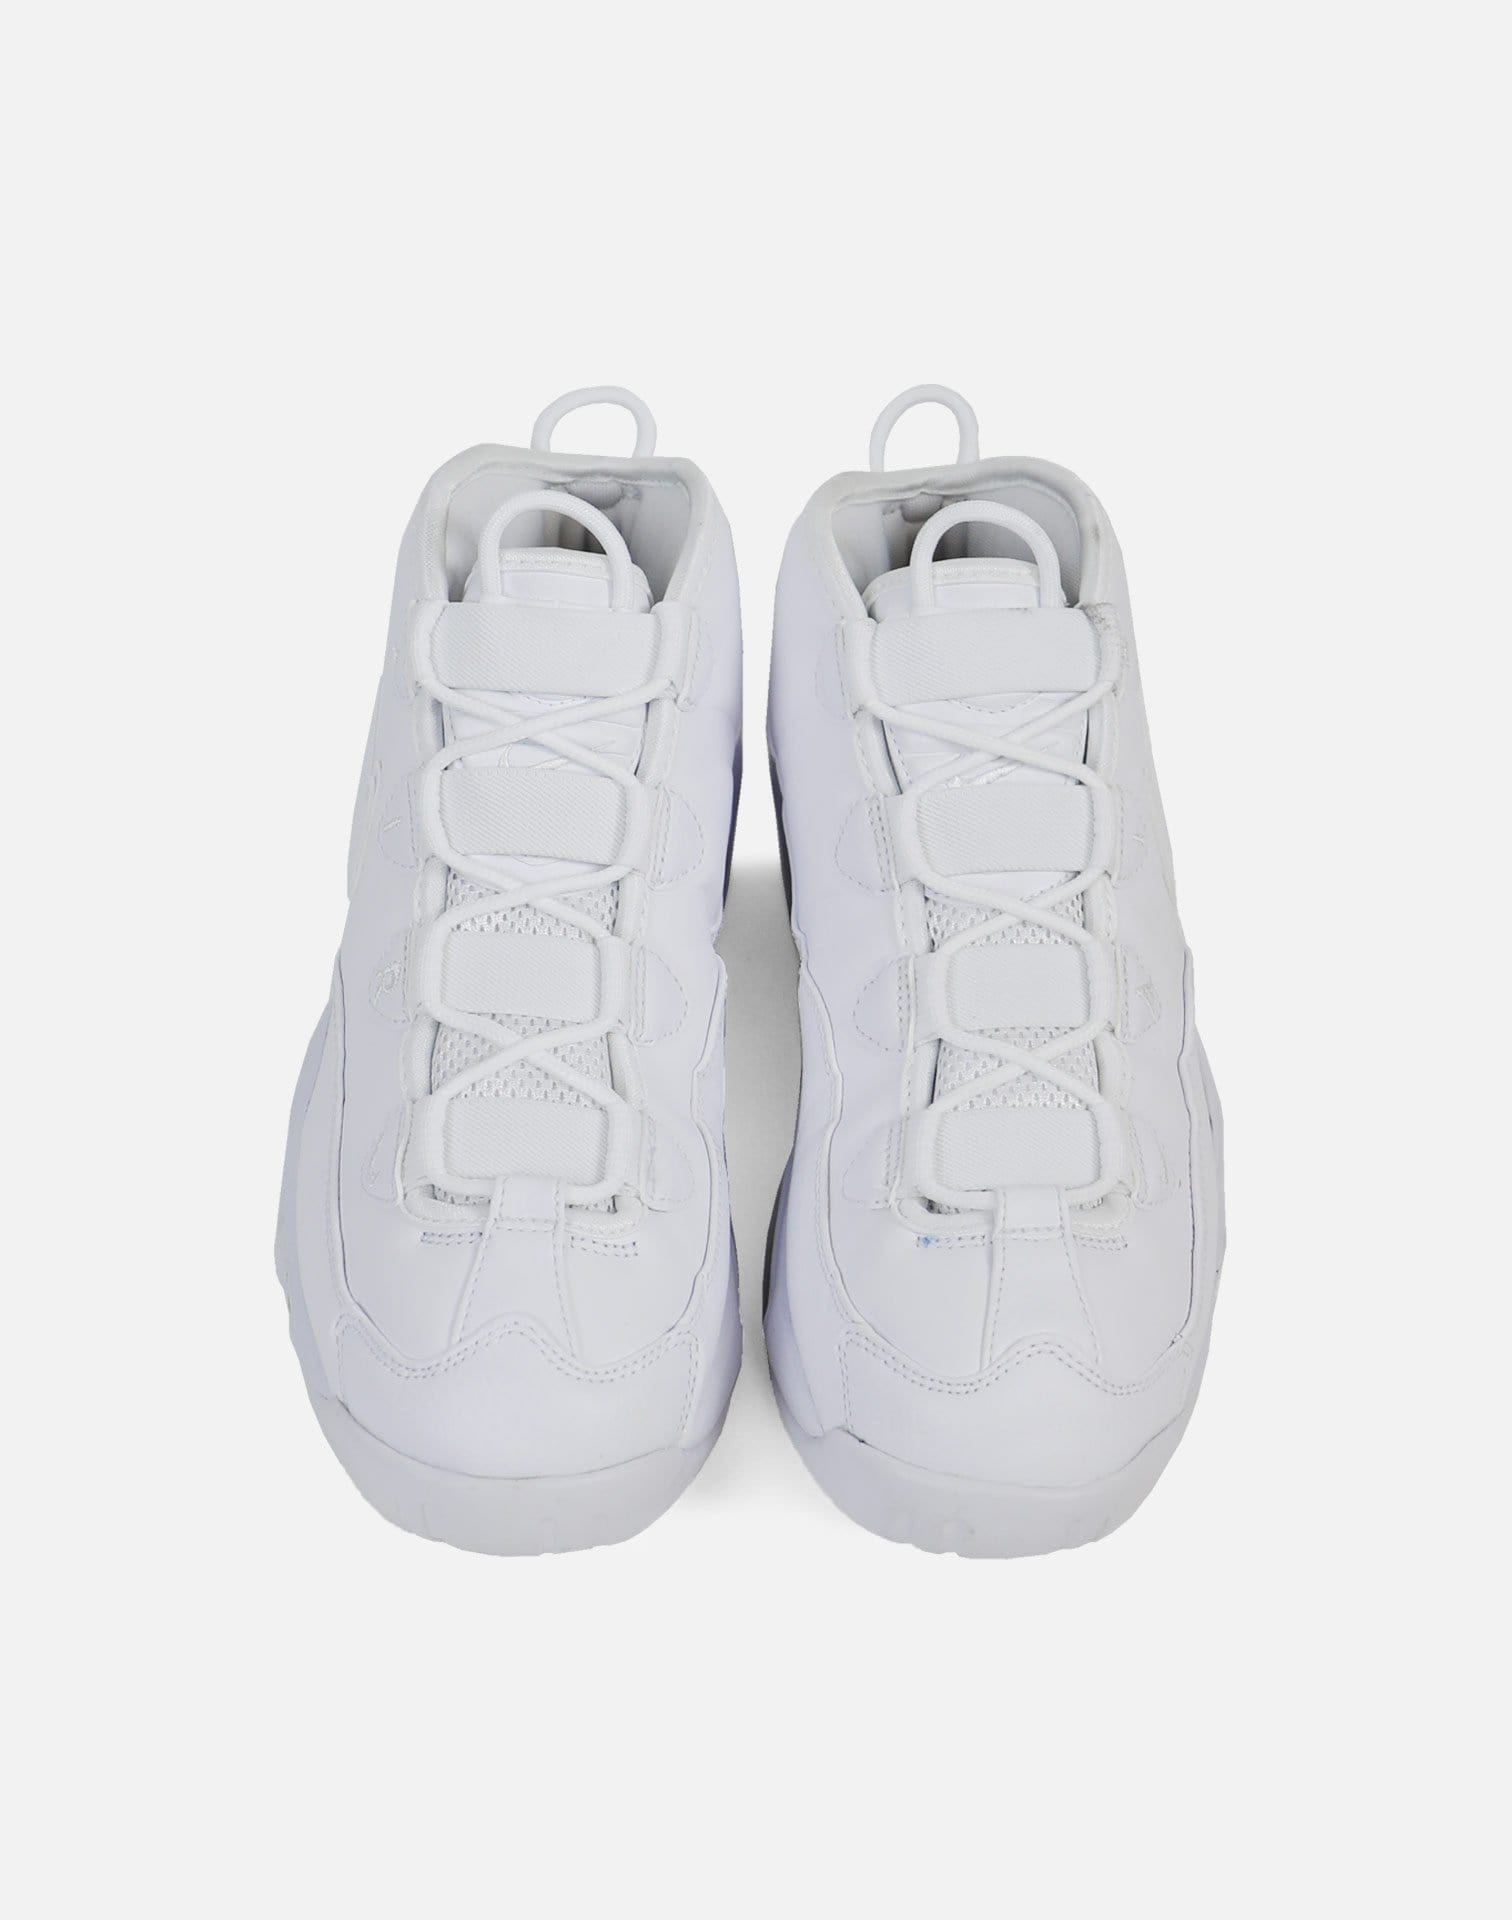 Nike Air Max Uptempo 95 (White/White-White)